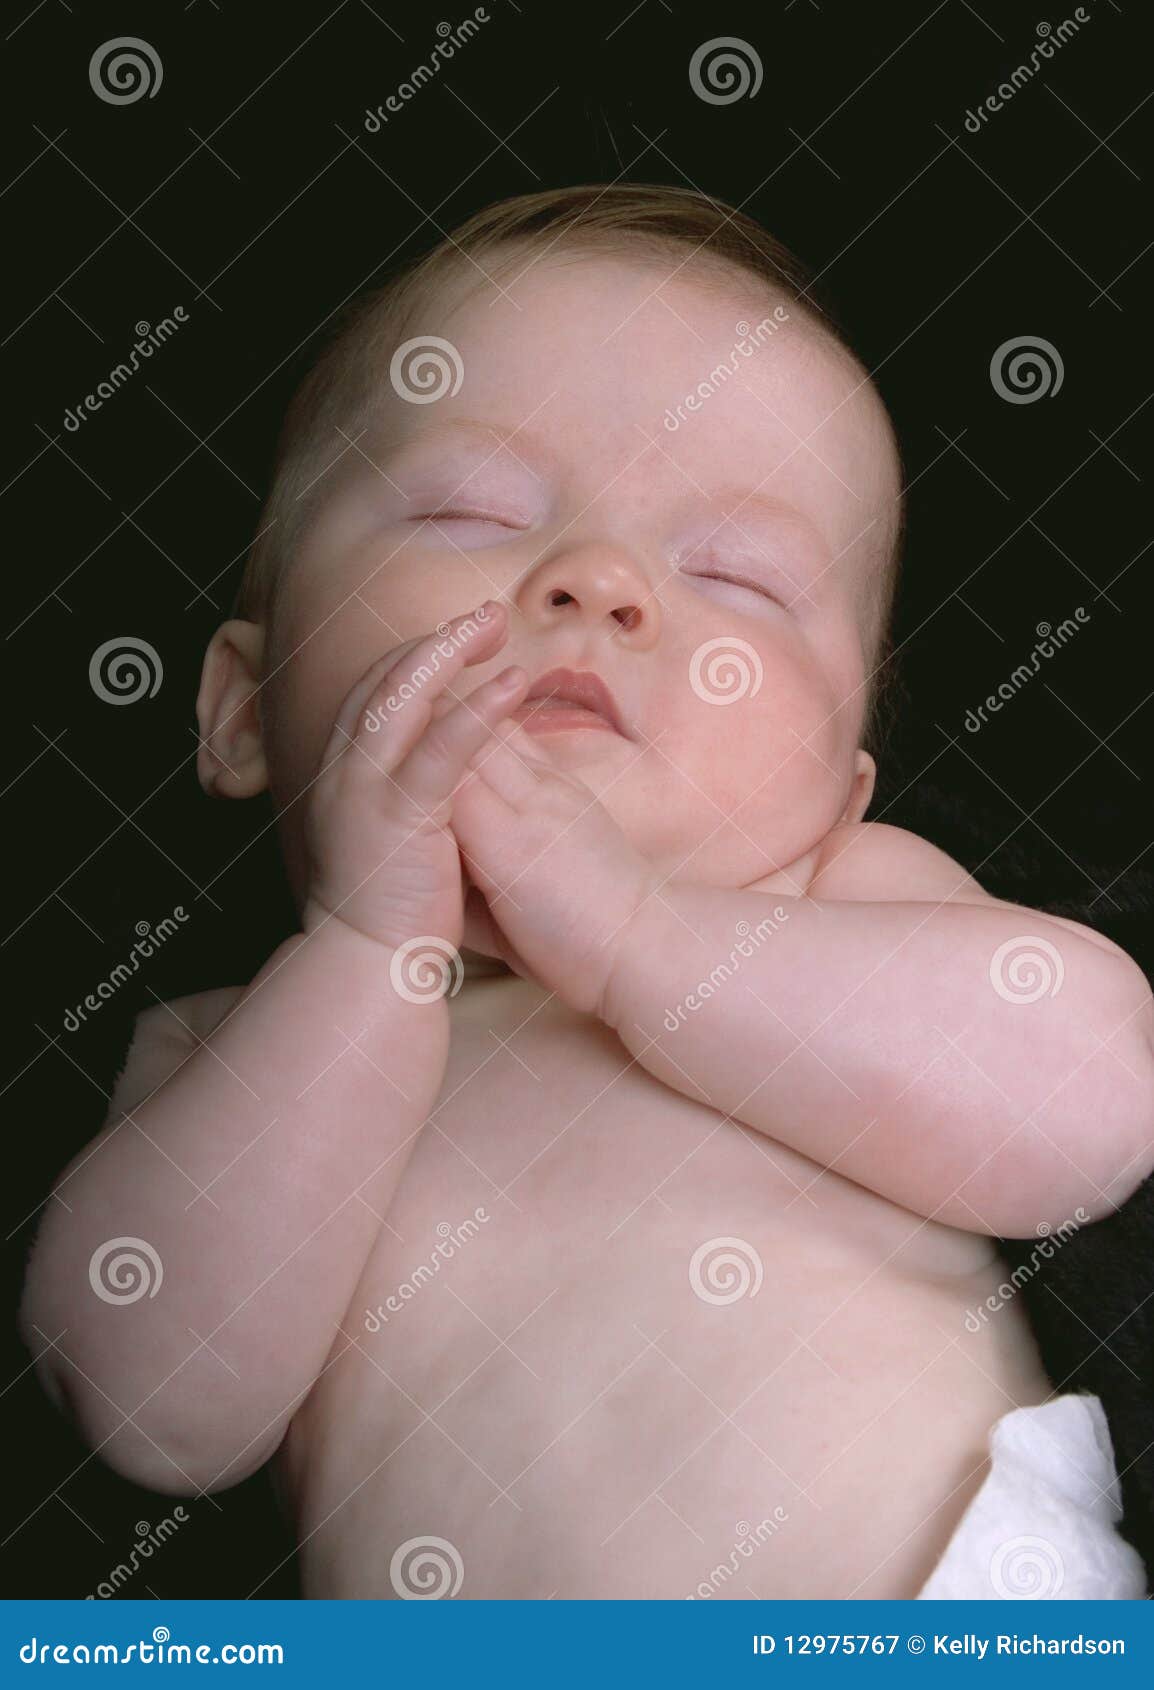 baby praying hands